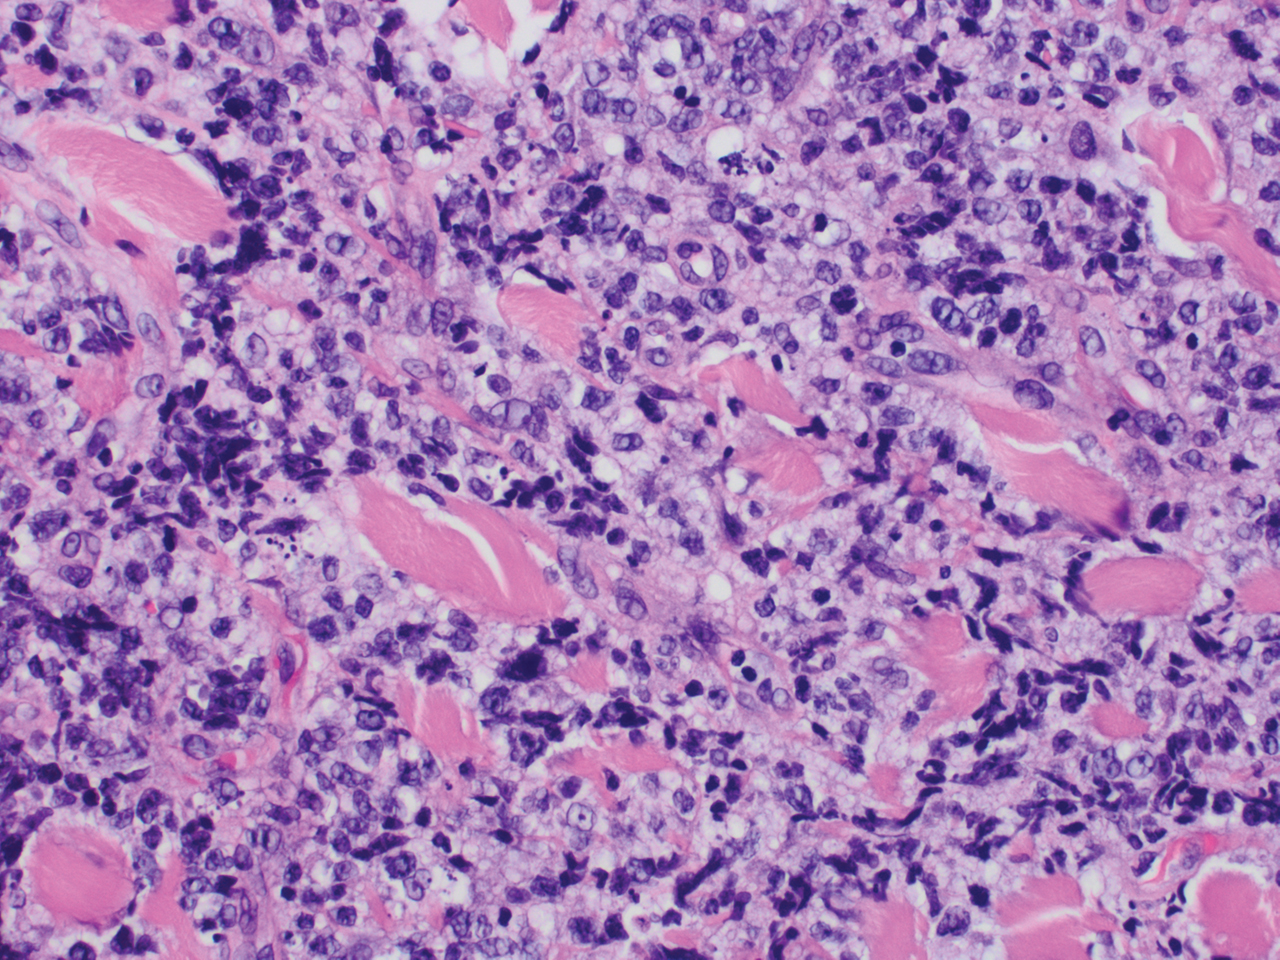 Cutaneous B-cell Lymphoma